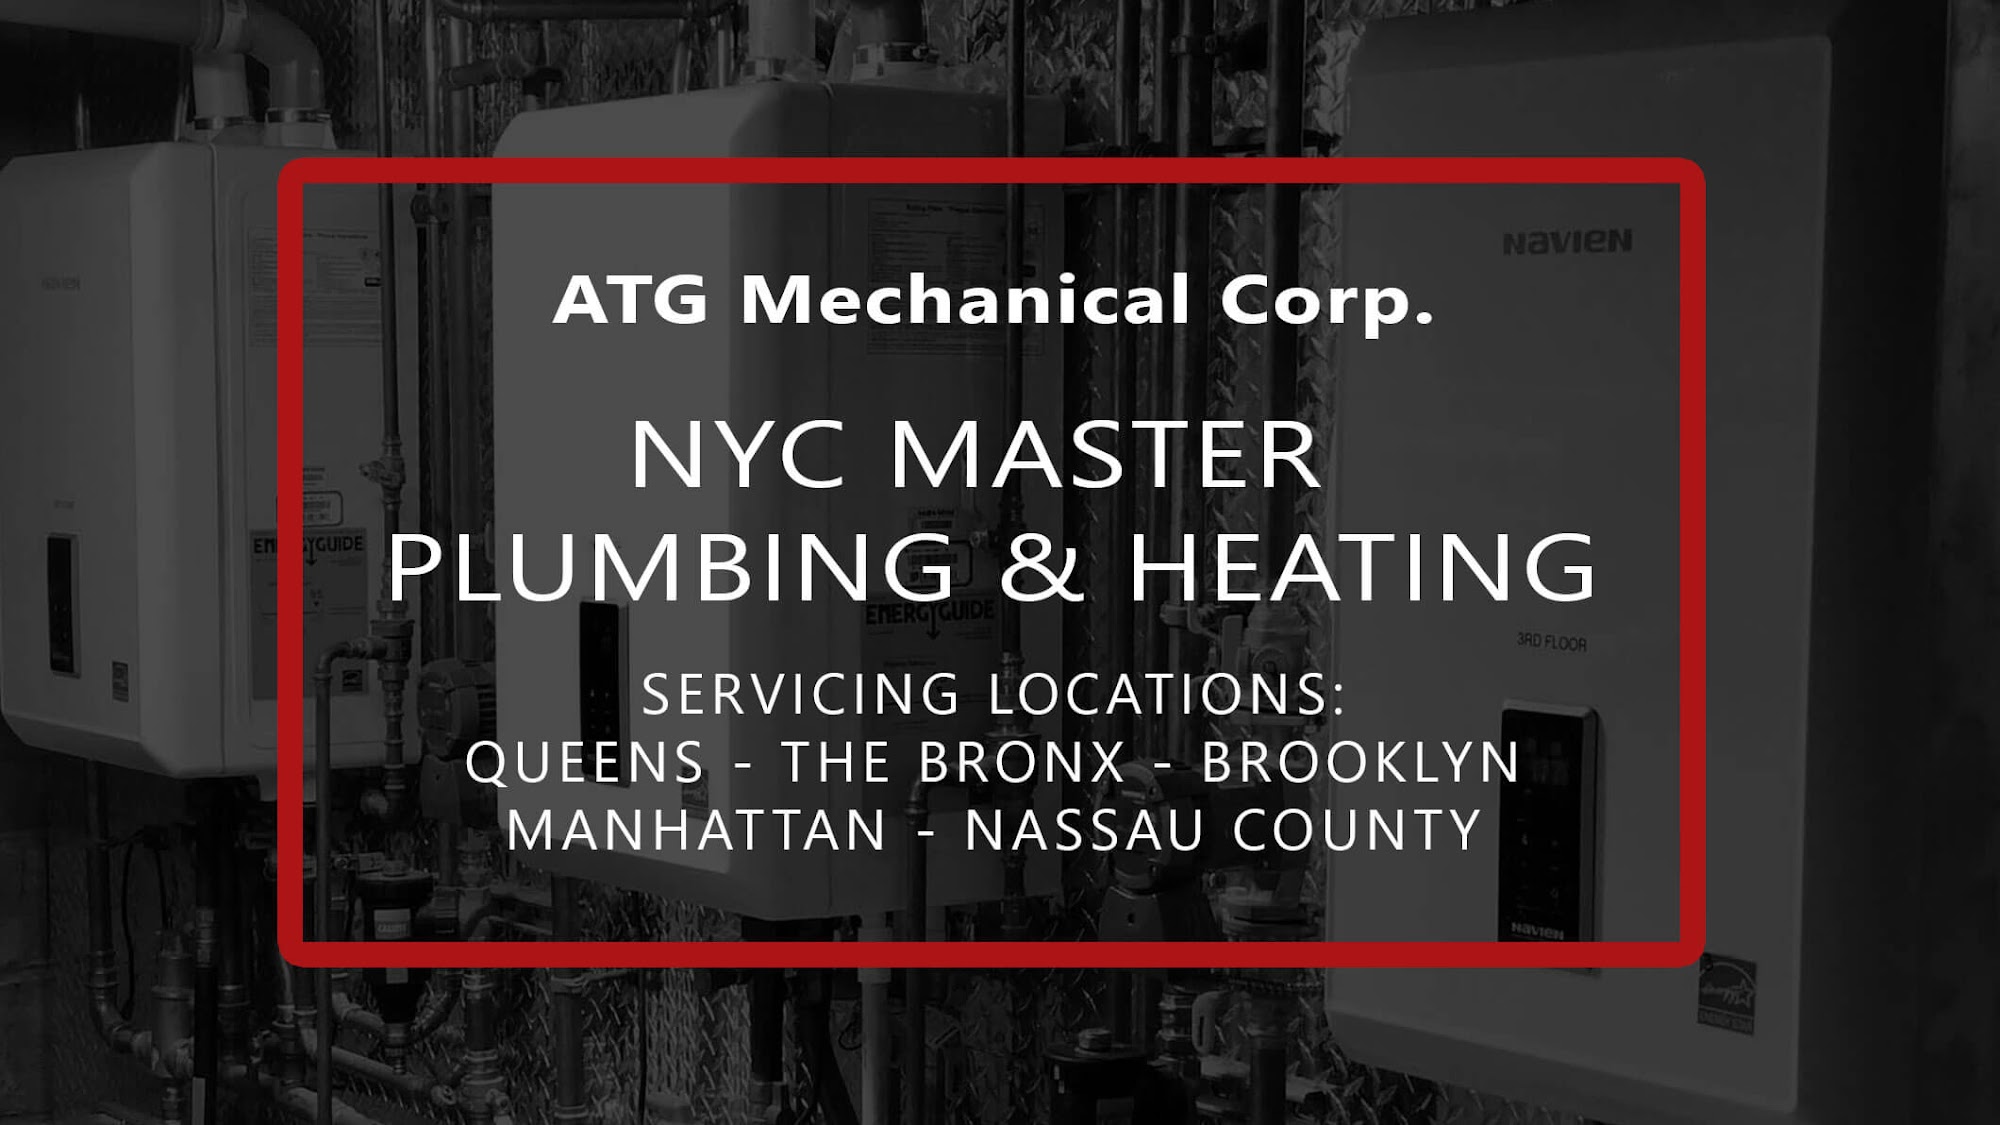 ATG Mechanical Corp. Plumbing & Heating